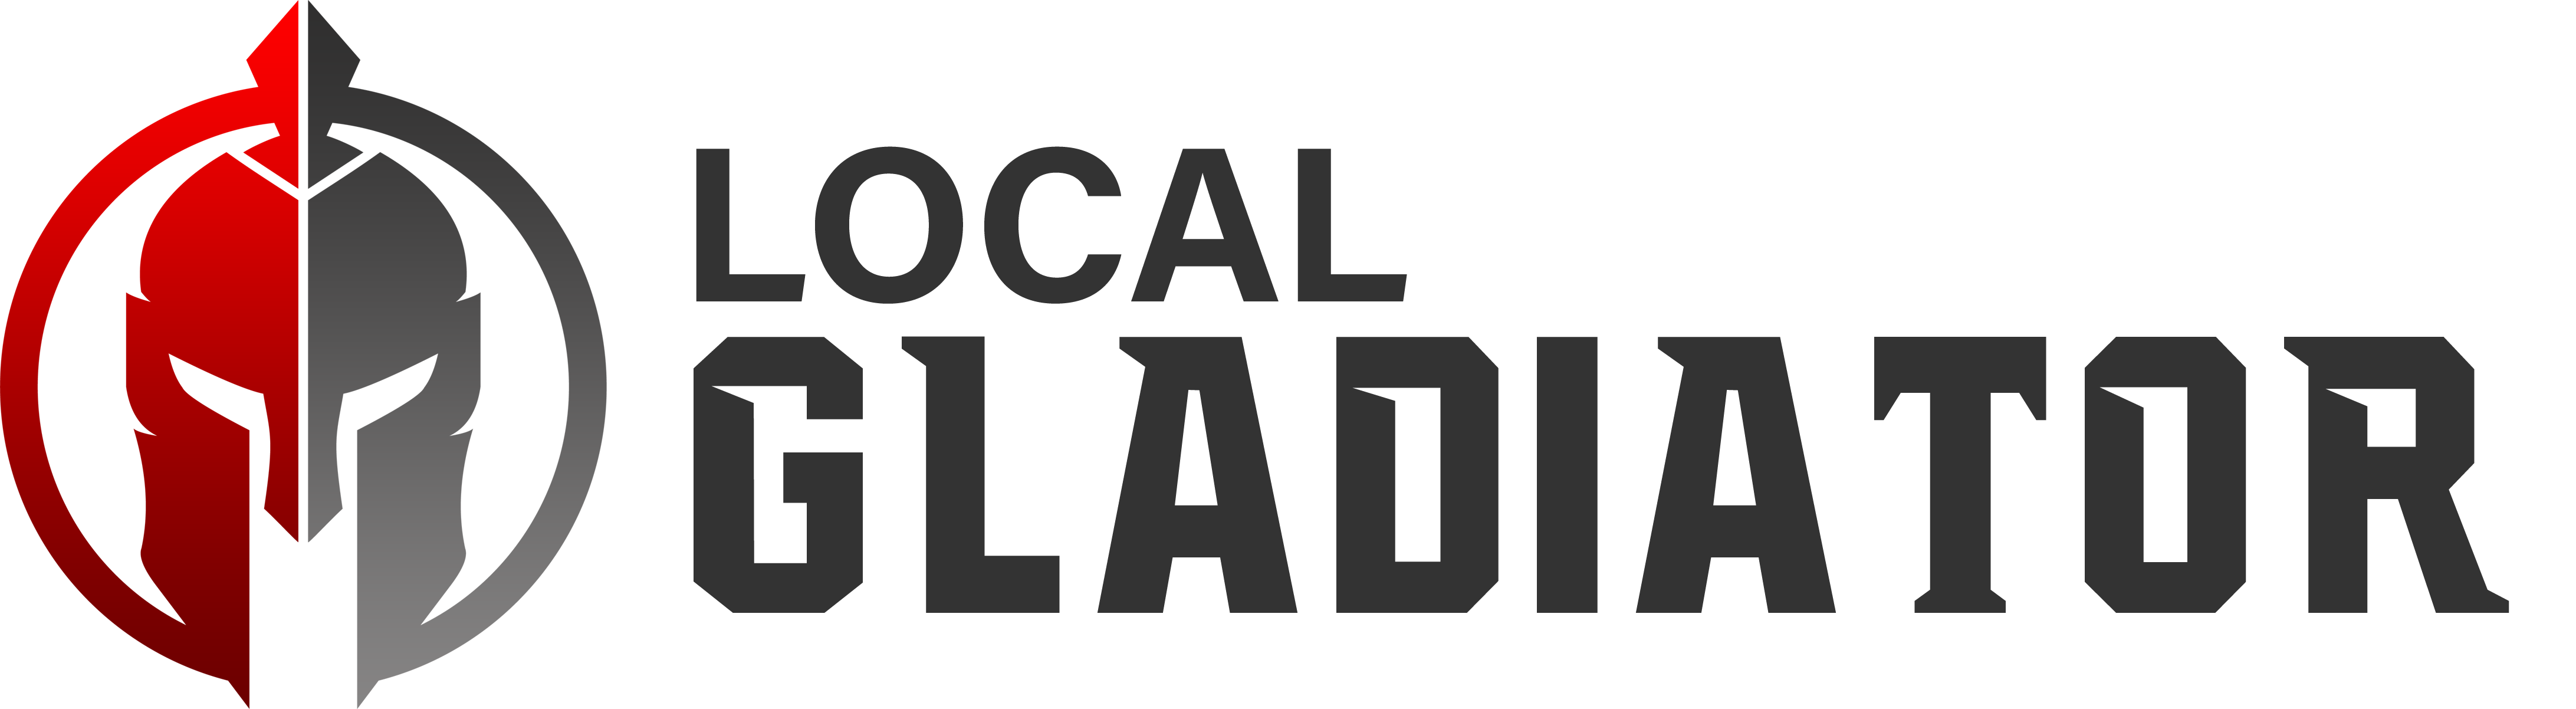 Local Gladiator Logo